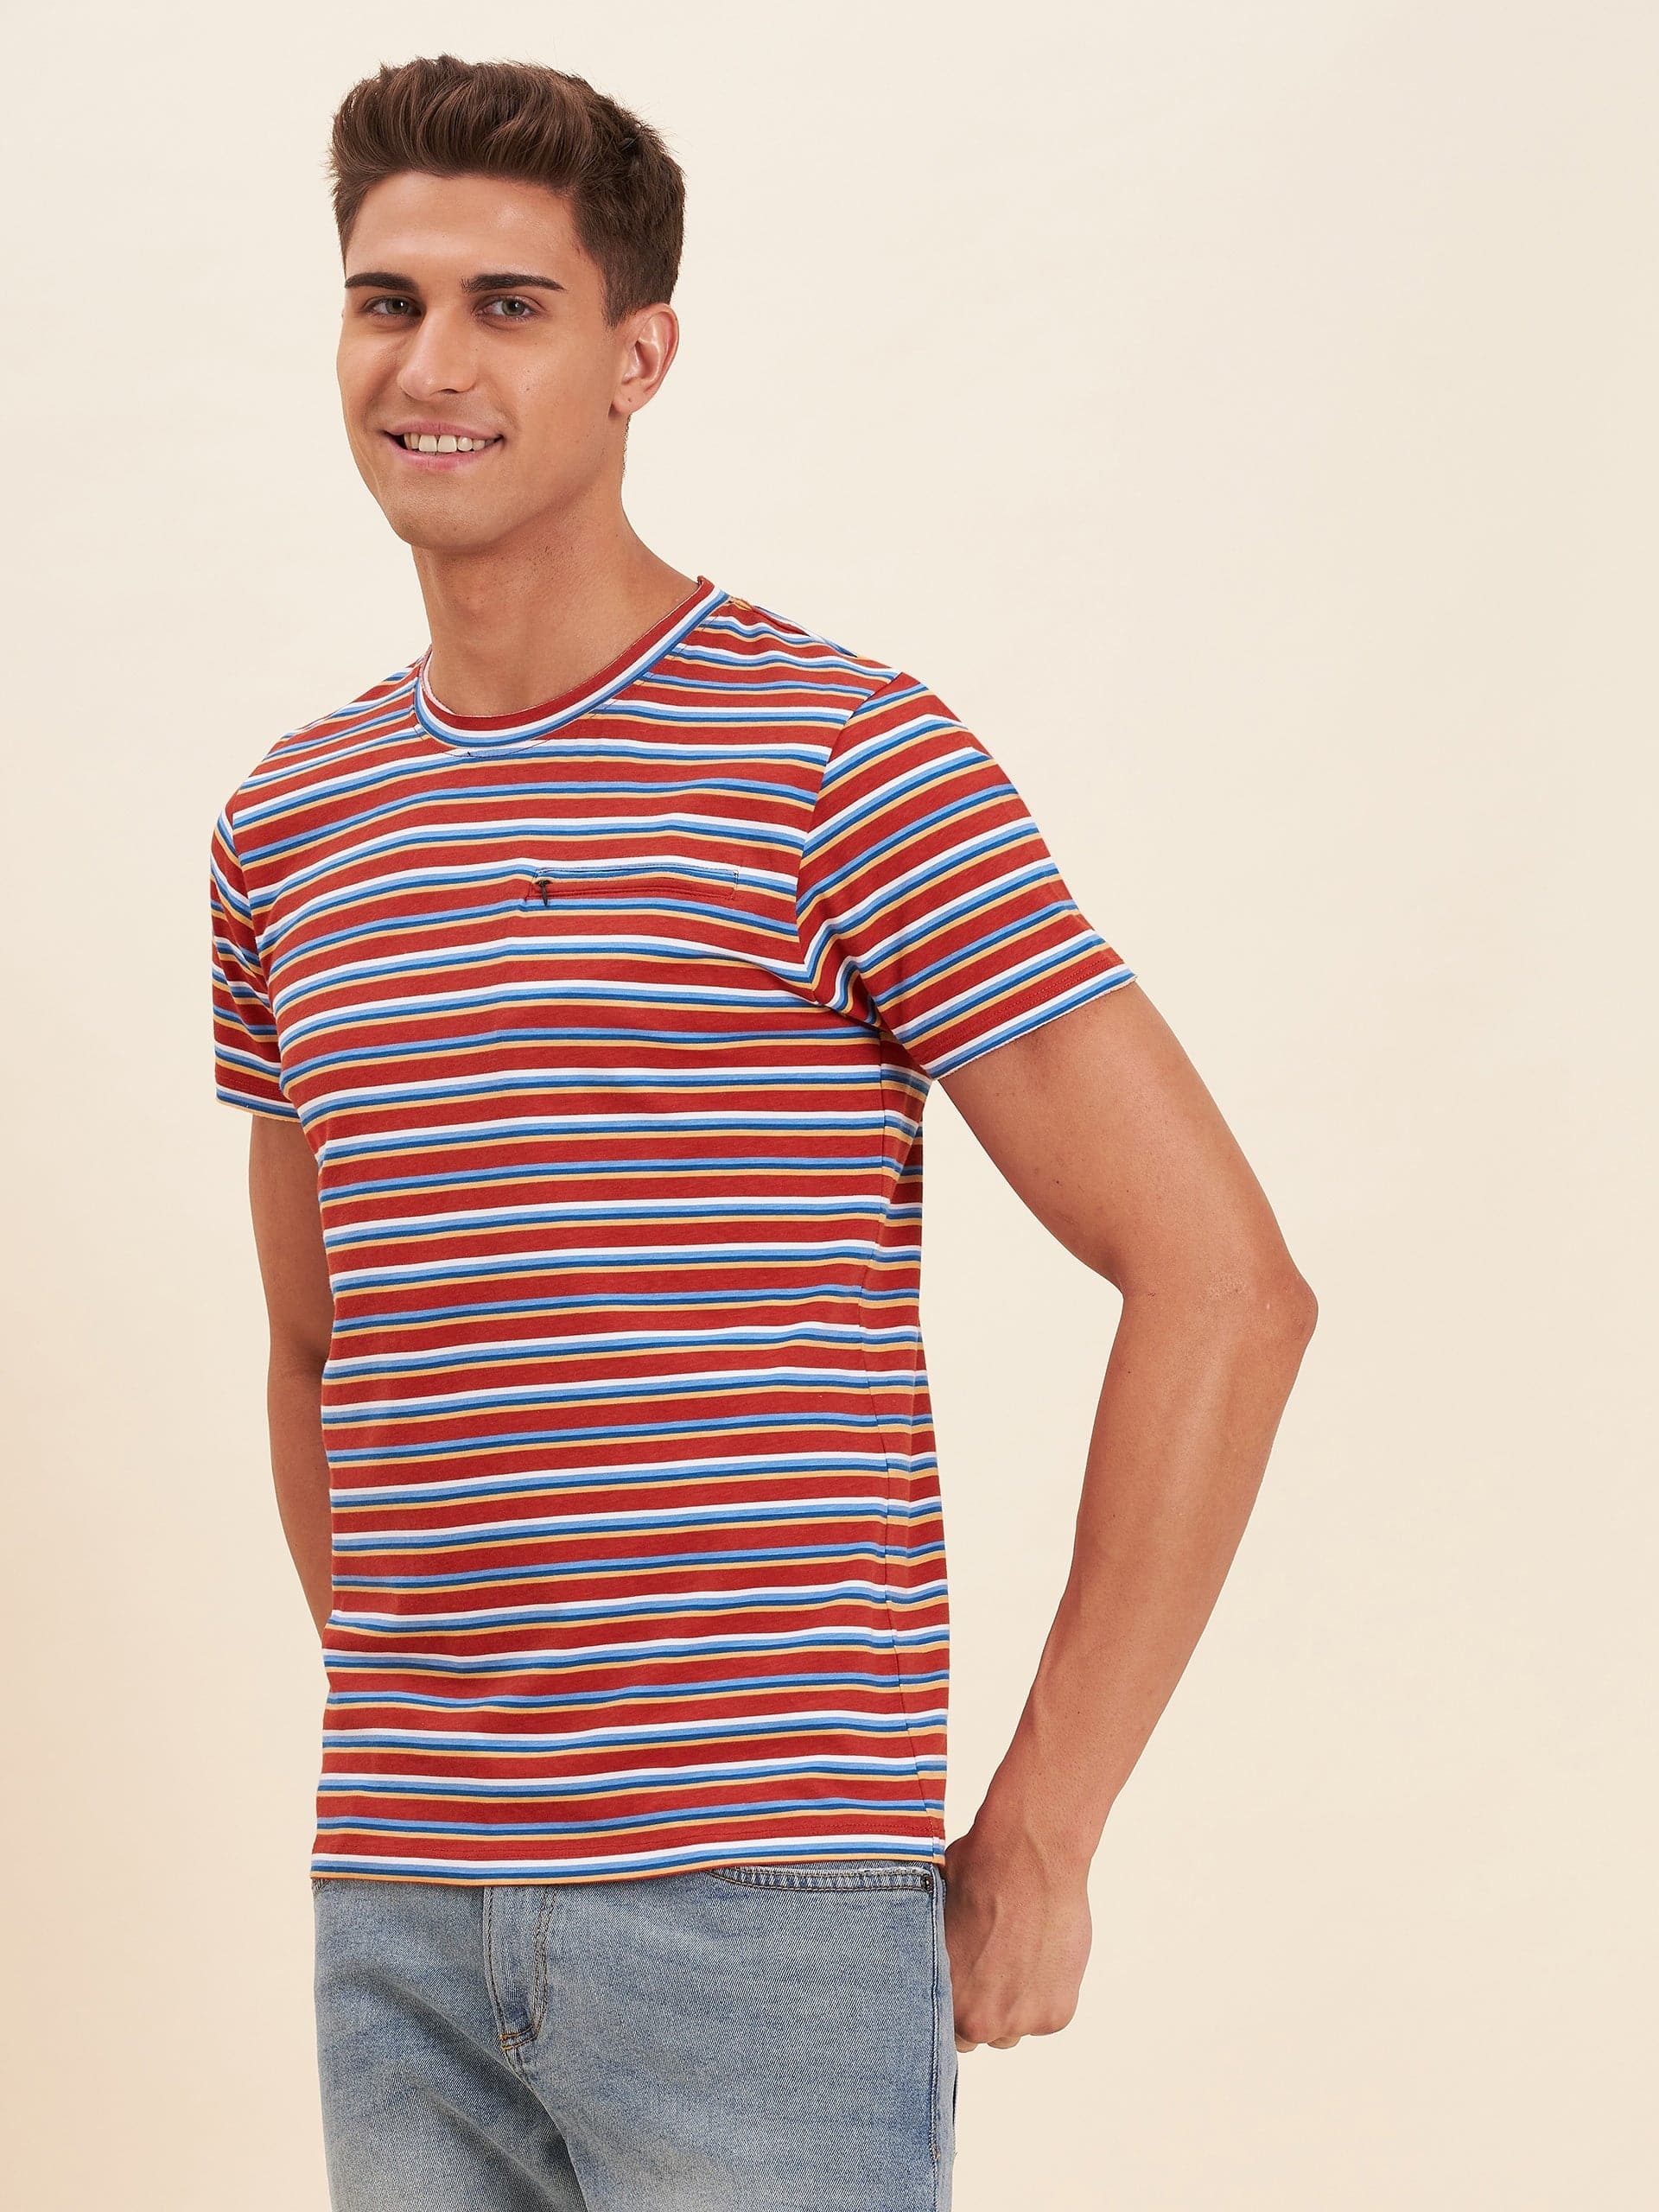 Men's Rust Multi Stripes Zipper Pocket Cotton T-Shirt - LYUSH-MASCLN